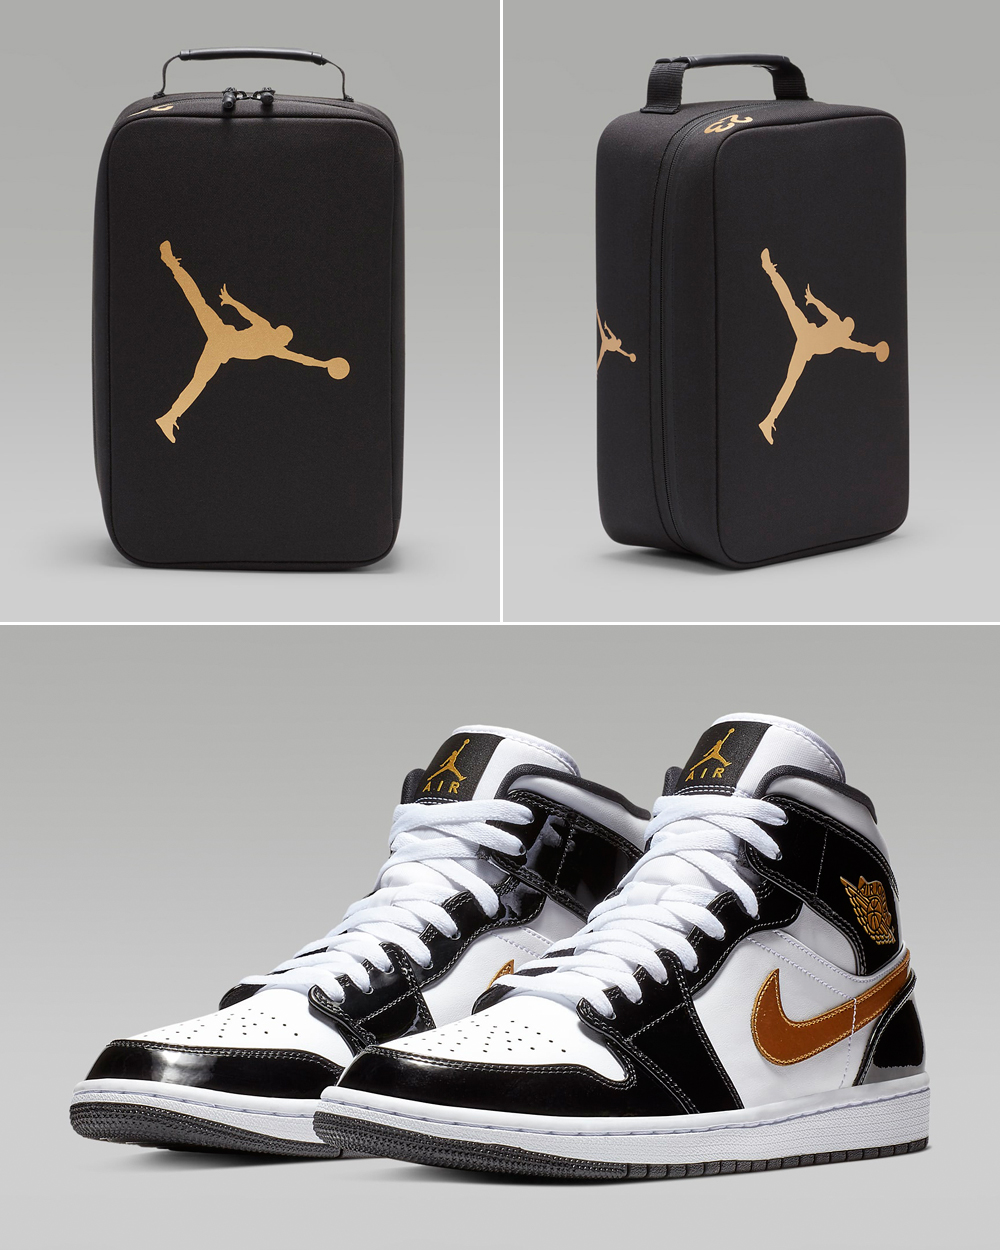 Air-Jordan-1-Mid-Patent-Black-Gold-Shoebox-Bag